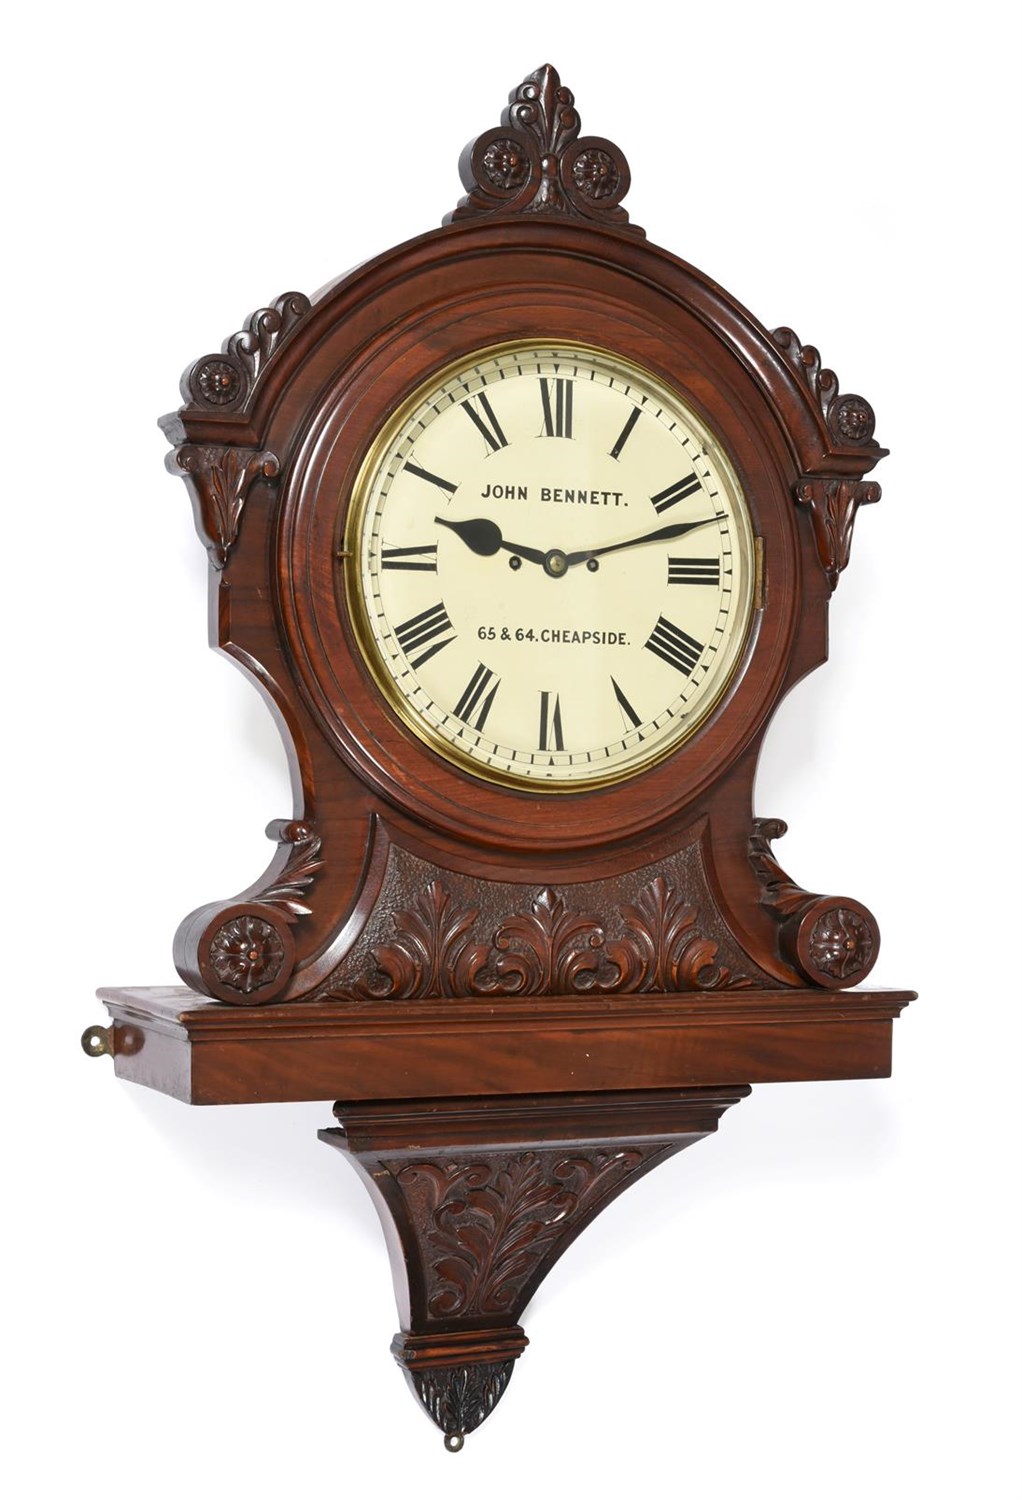 Lot 413 - A Victorian Carved Mahogany Striking Bracket Wall Clock, signed John Bennett, 65&64 Cheapside,...